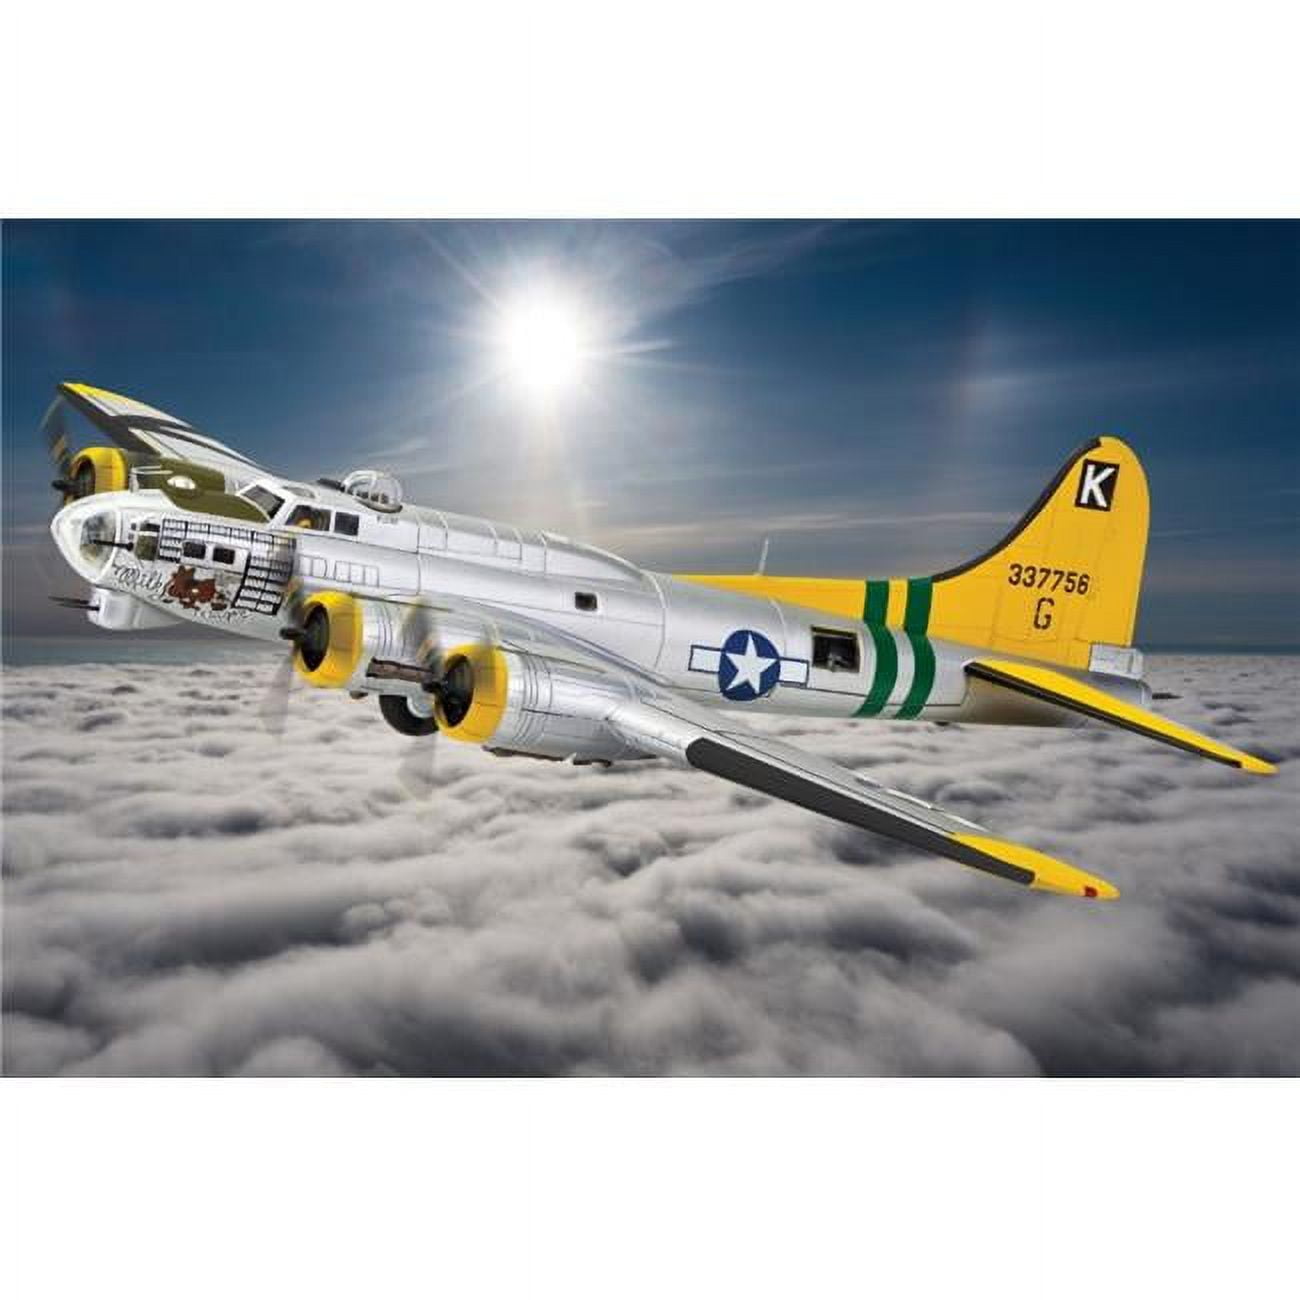 Corghi USA Corgi CG33321 1-72 Scale Boeing B17G Flying Fortress Milk Wagon Dies Cast Model Aeroplane Toys